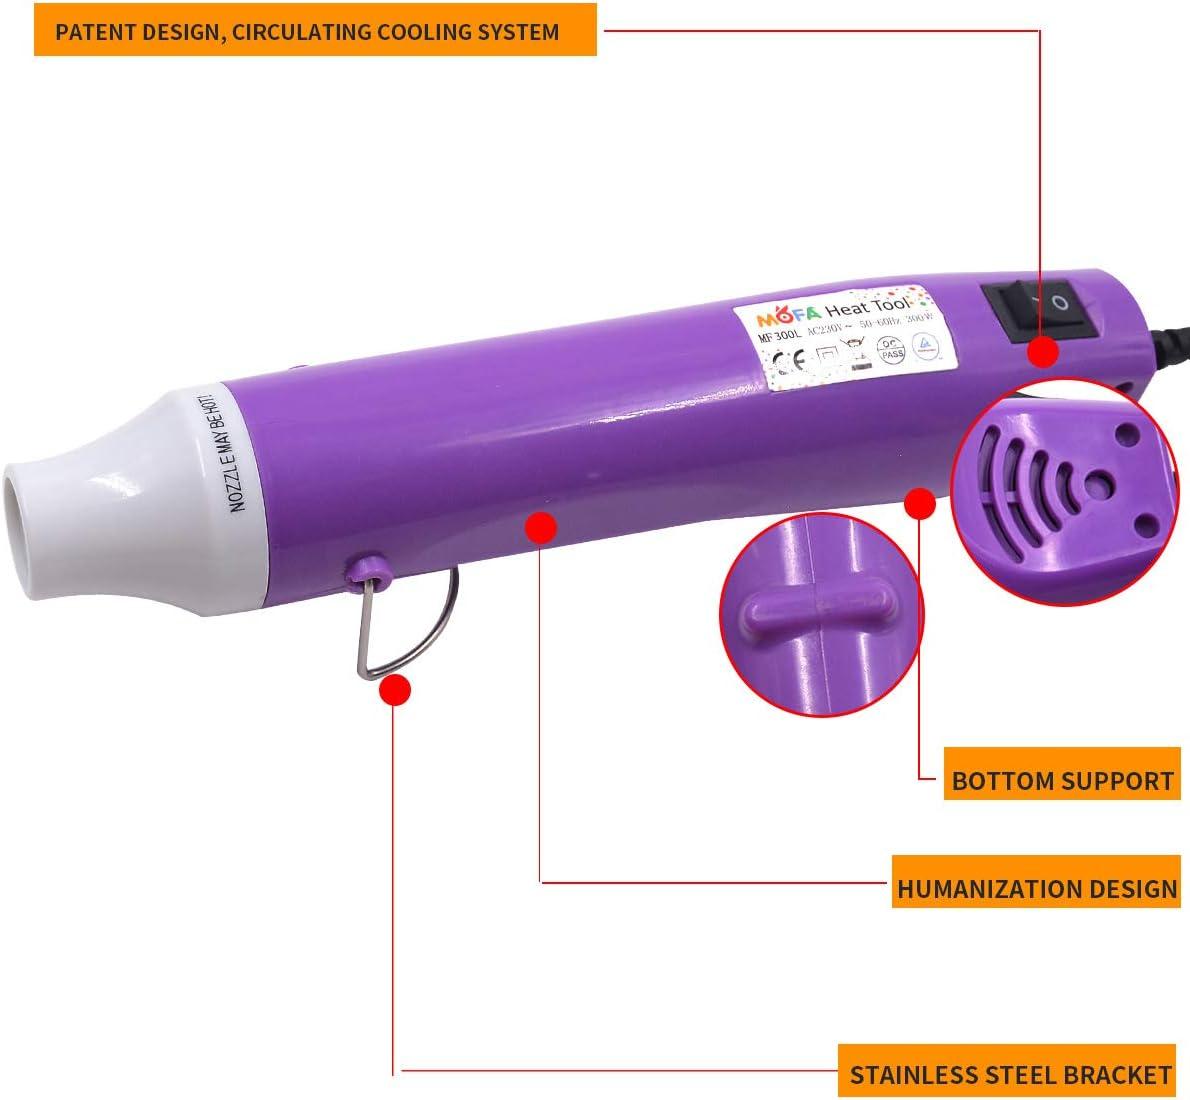 Mini Heat Gun, Electric Hot Air Gun Heating Tools for DIY, Embossing,  Crafts, Shrink Wrap, Drying Paint 110V, White